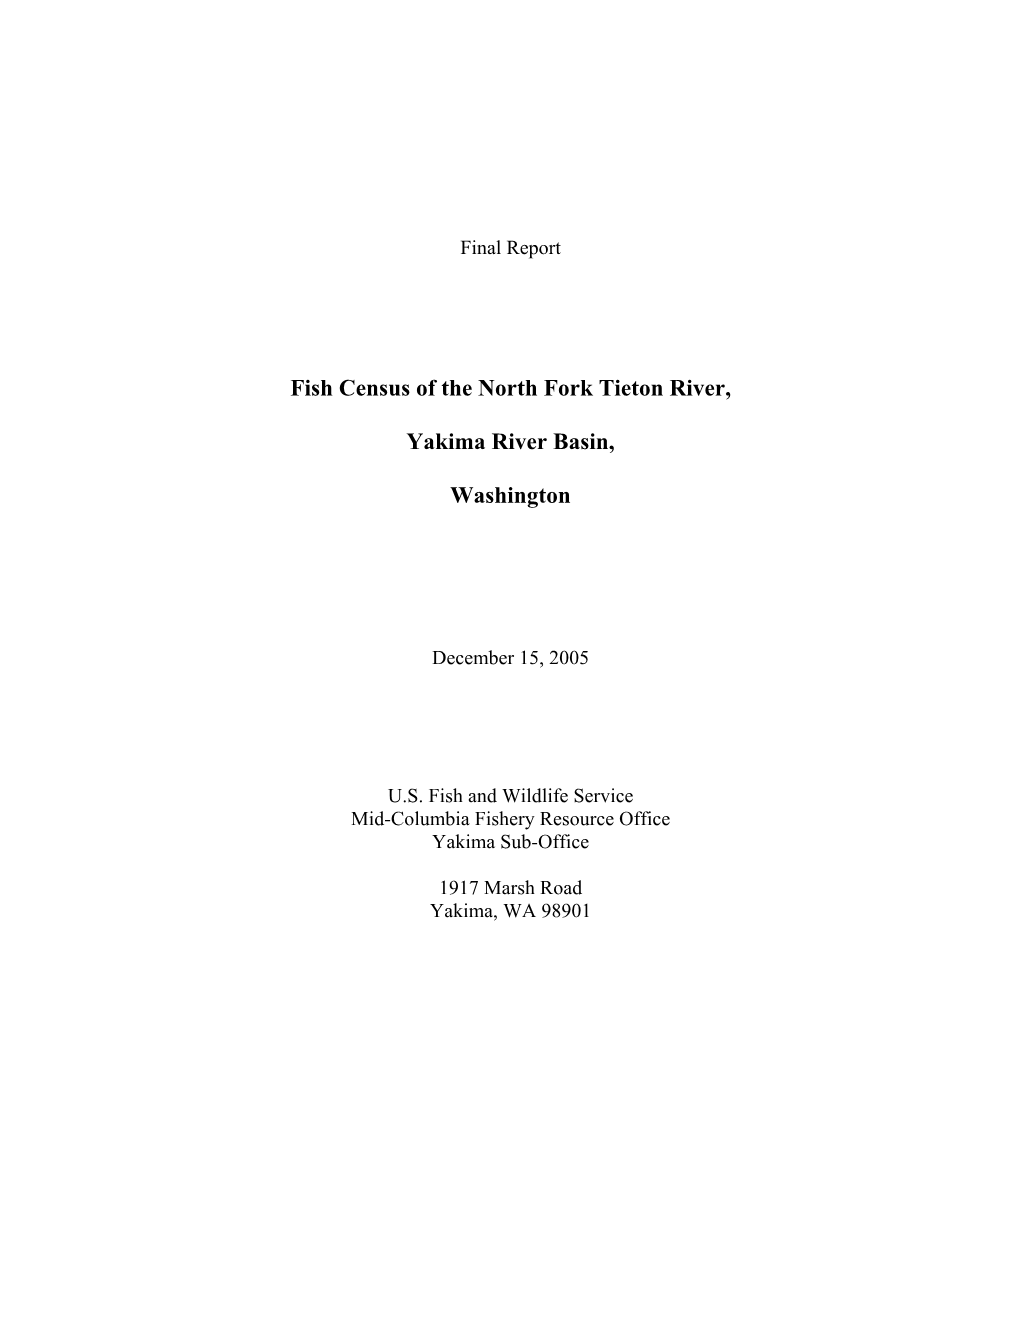 Fish Census of the North Fork Tieton River, Yakima River Basin